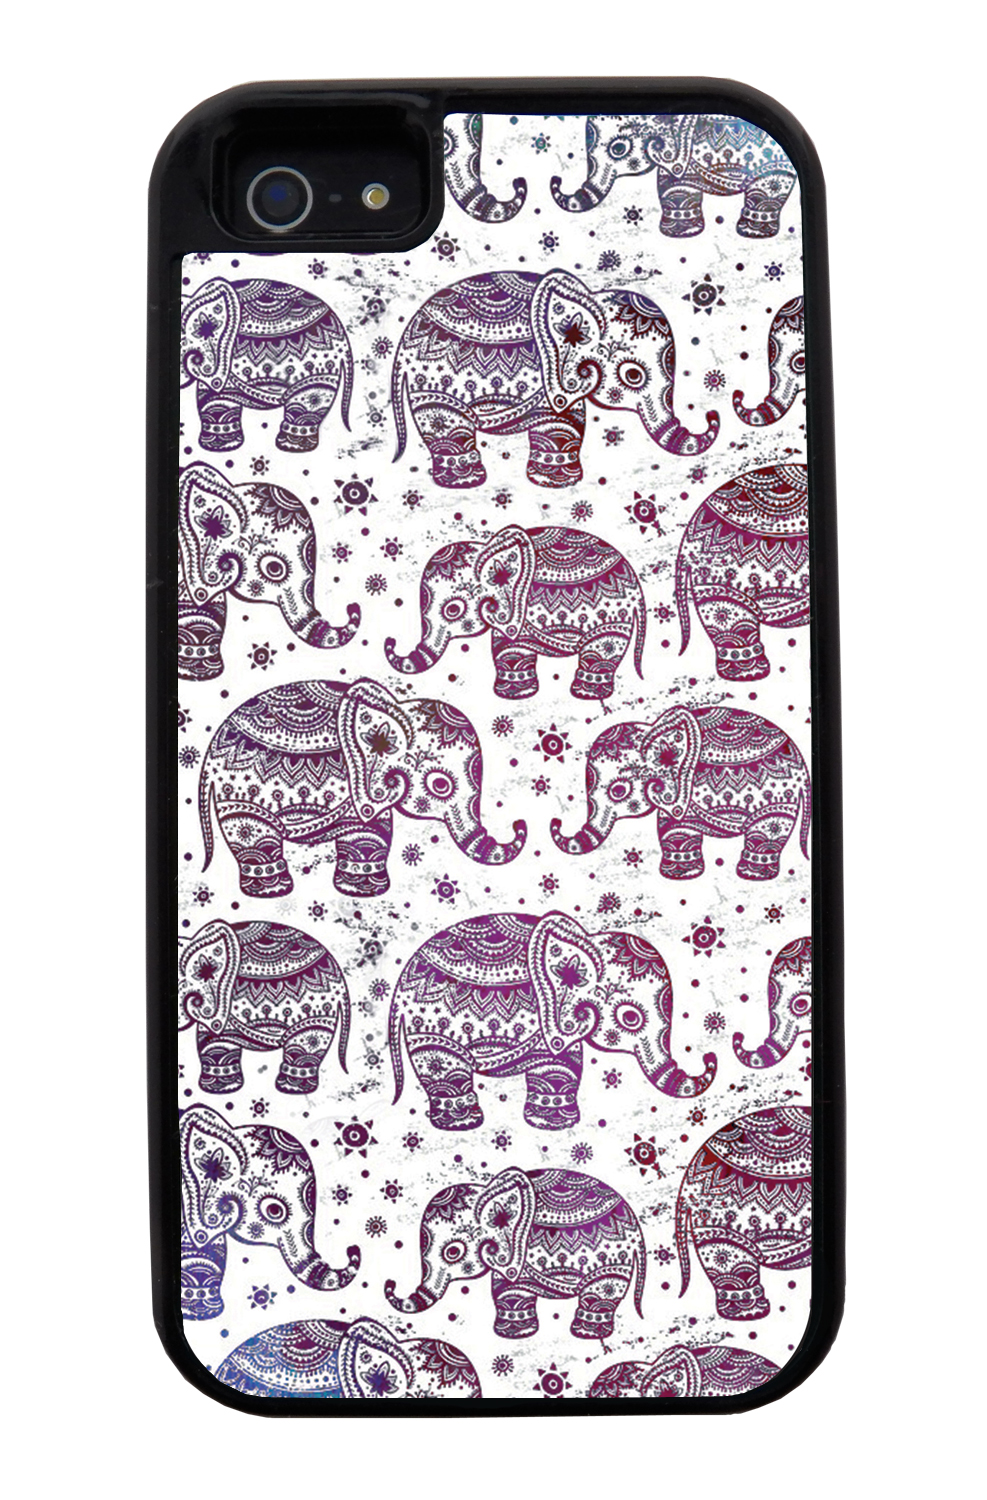 Apple iPhone 5 / 5S Aztec Case - Sun Sparkled Neon Lights Purple on White - Tribal Elephant - Black Tough Hybrid Case